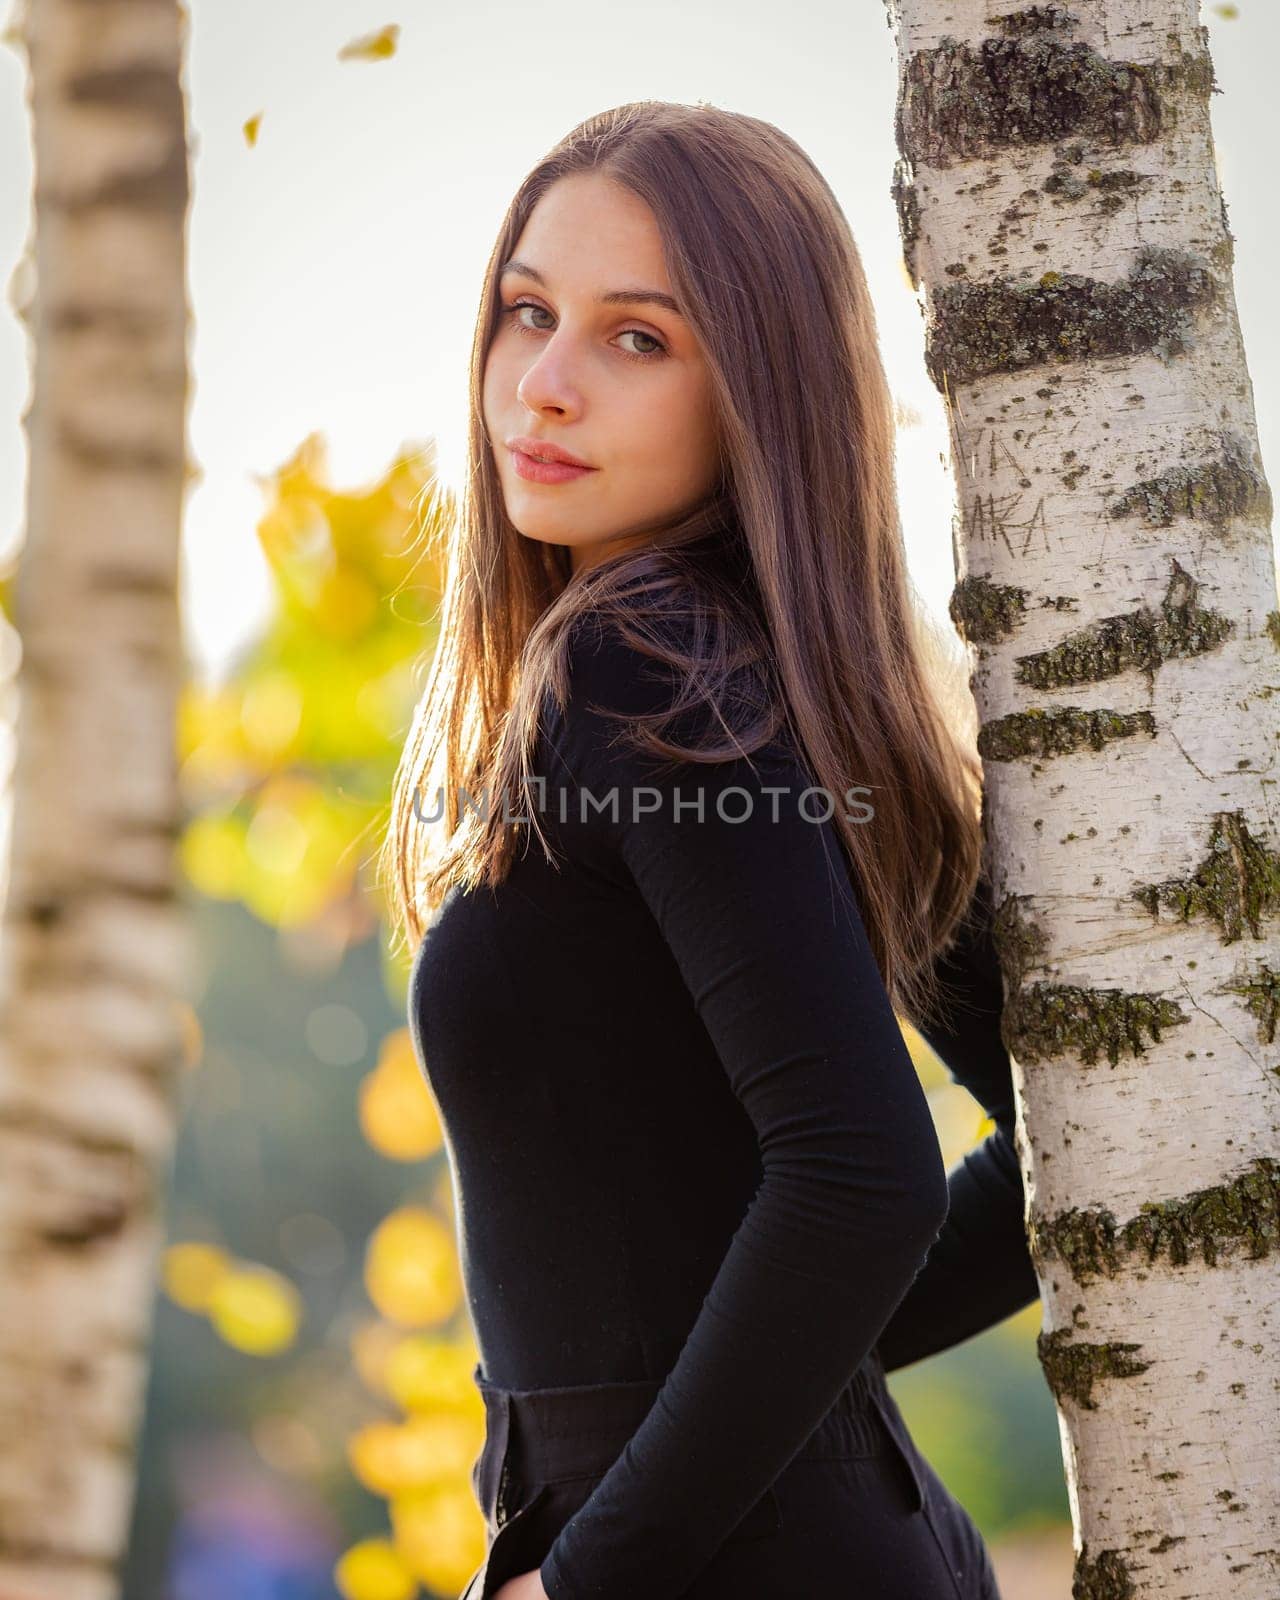 A beautiful girl posing near a birch tree in an autumn park. by Yurich32